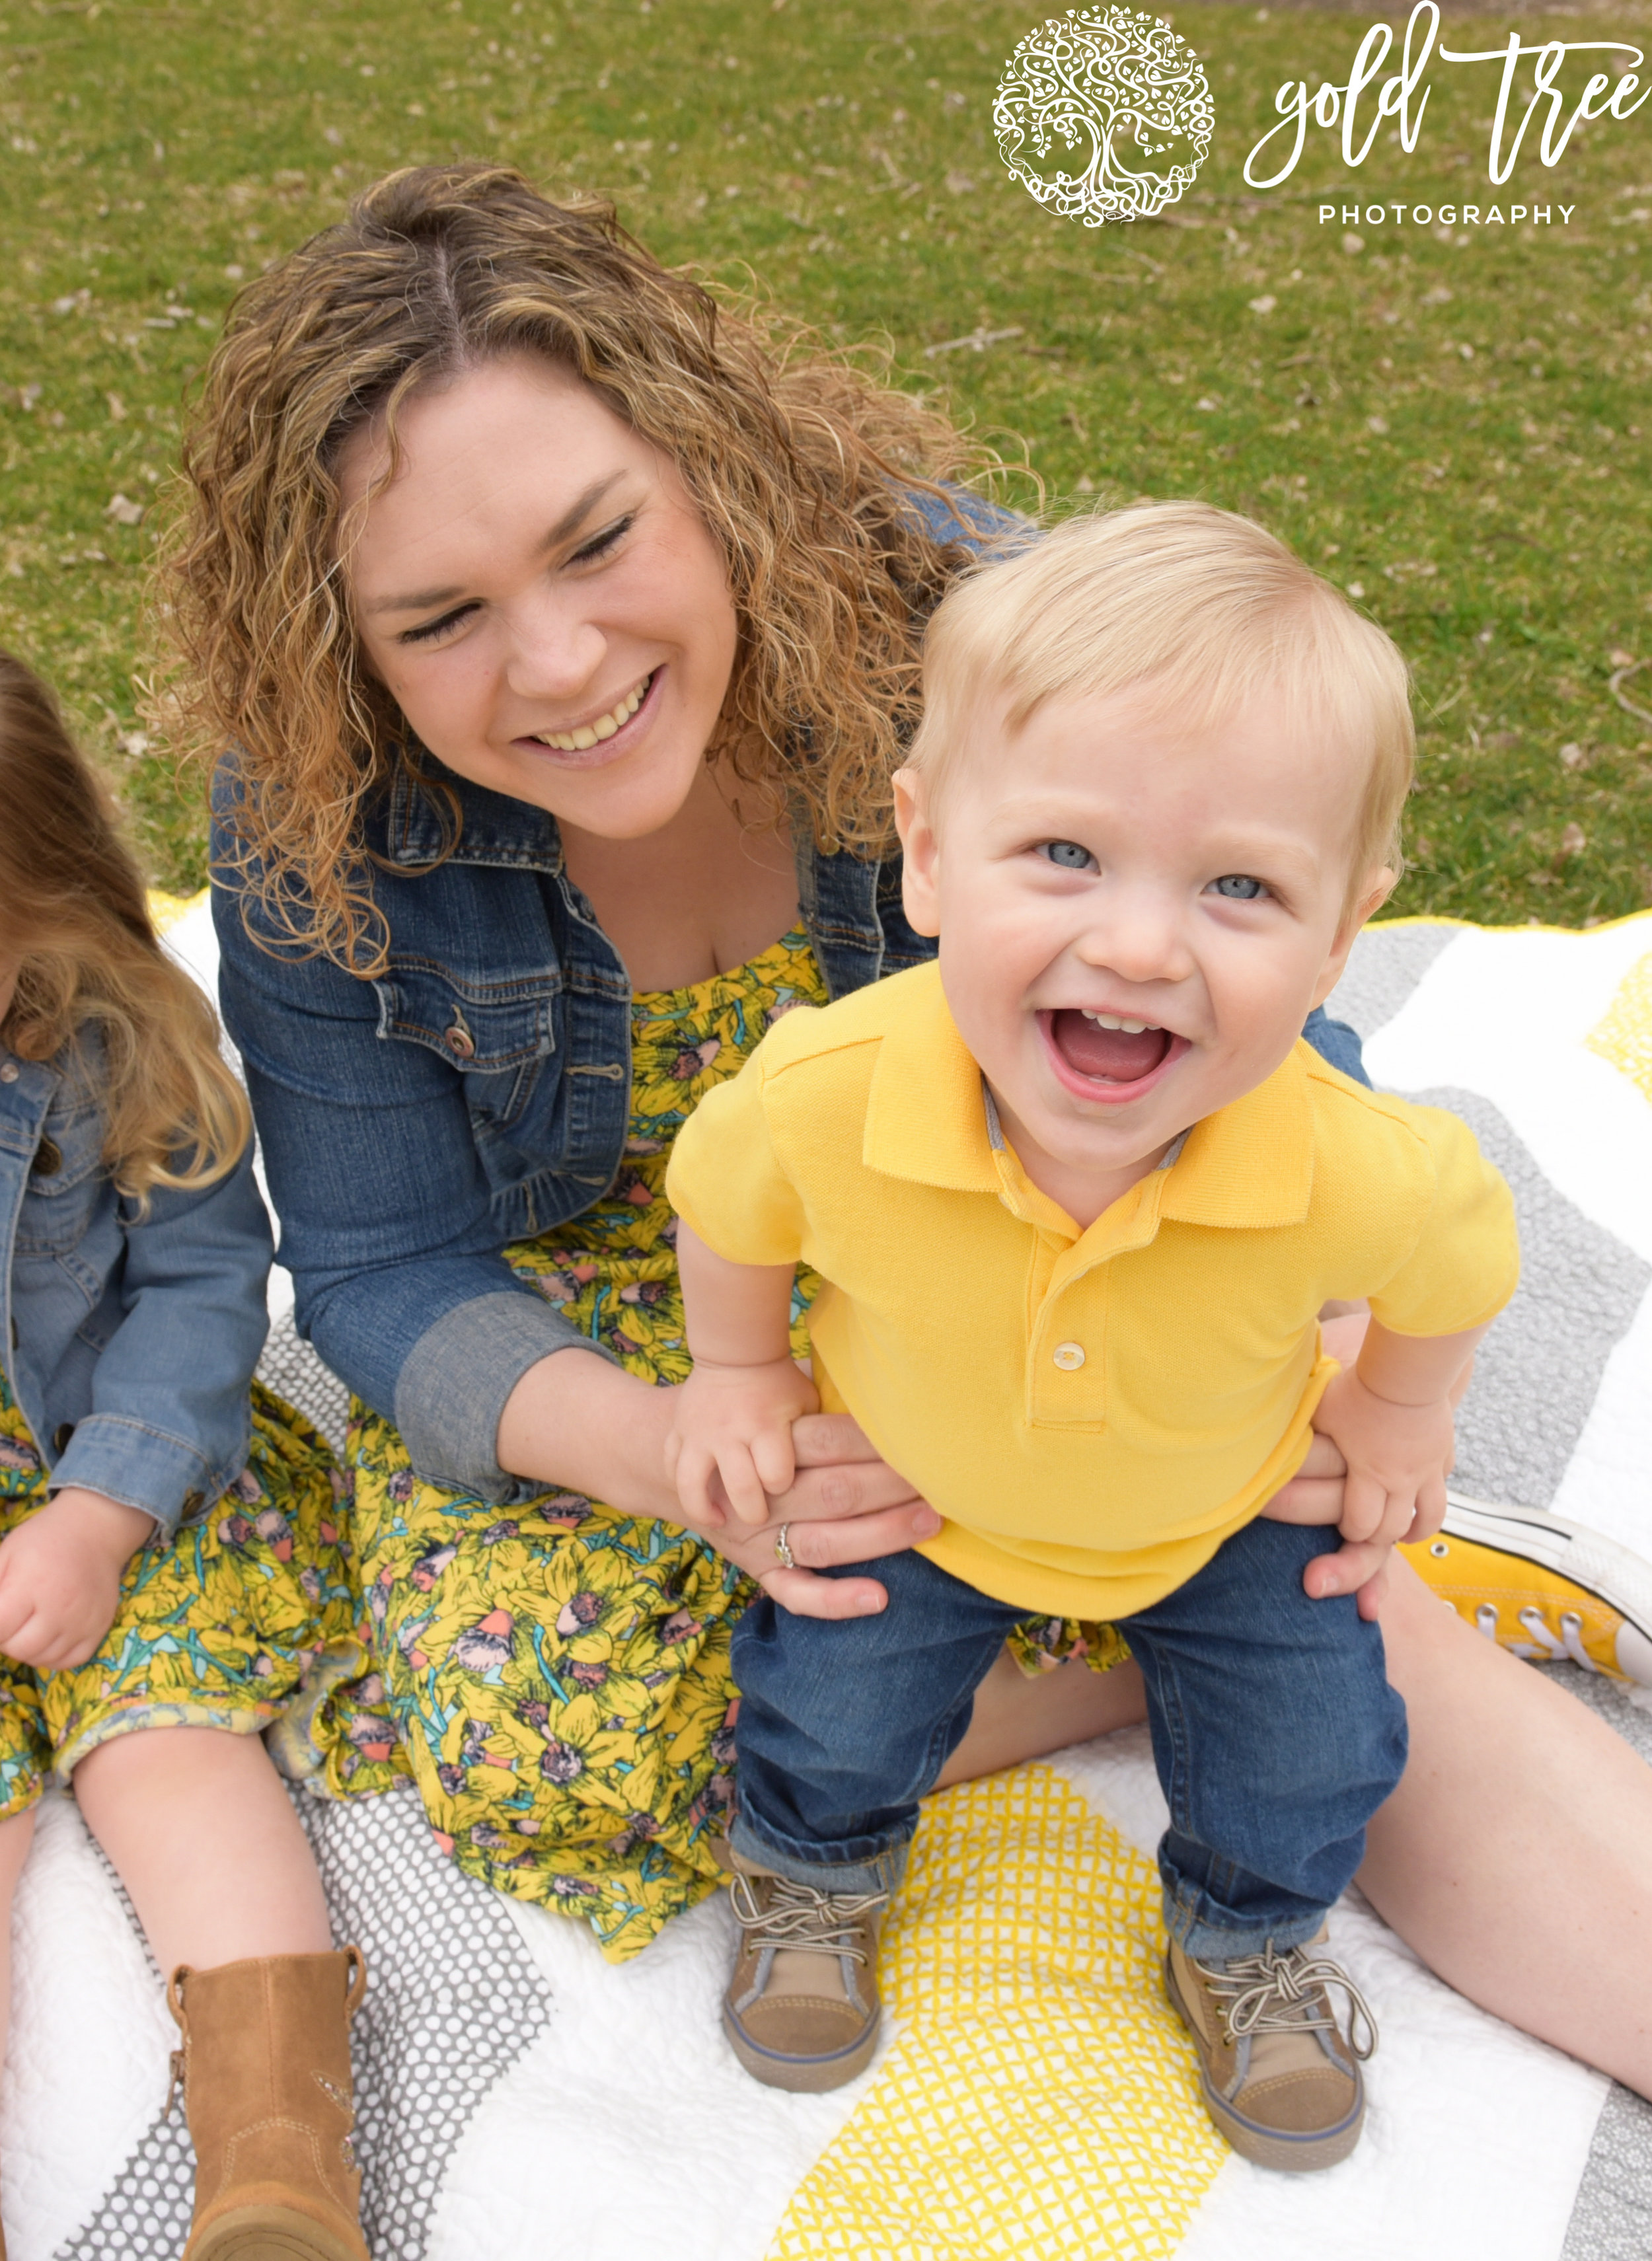 Lindsey,Emma&OwenLogo2-Mommy&Me-GOLDTREEPHOTOGRAPHY-1.jpg